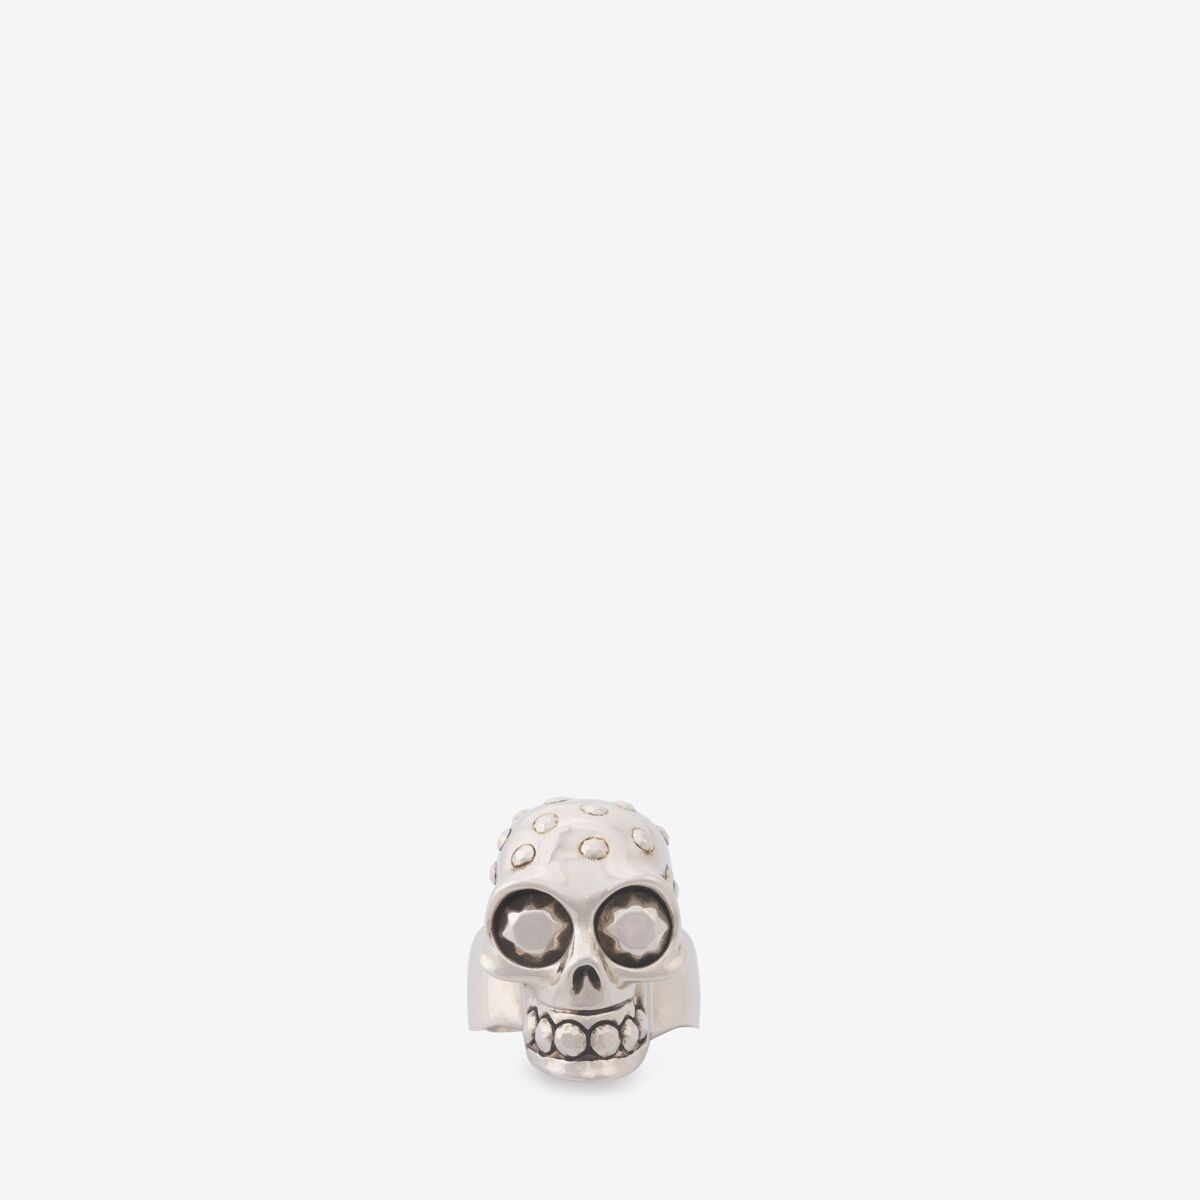 ALEXANDER MCQUEEN - The Knuckle Skull Ring - Item 748200J160Y0446